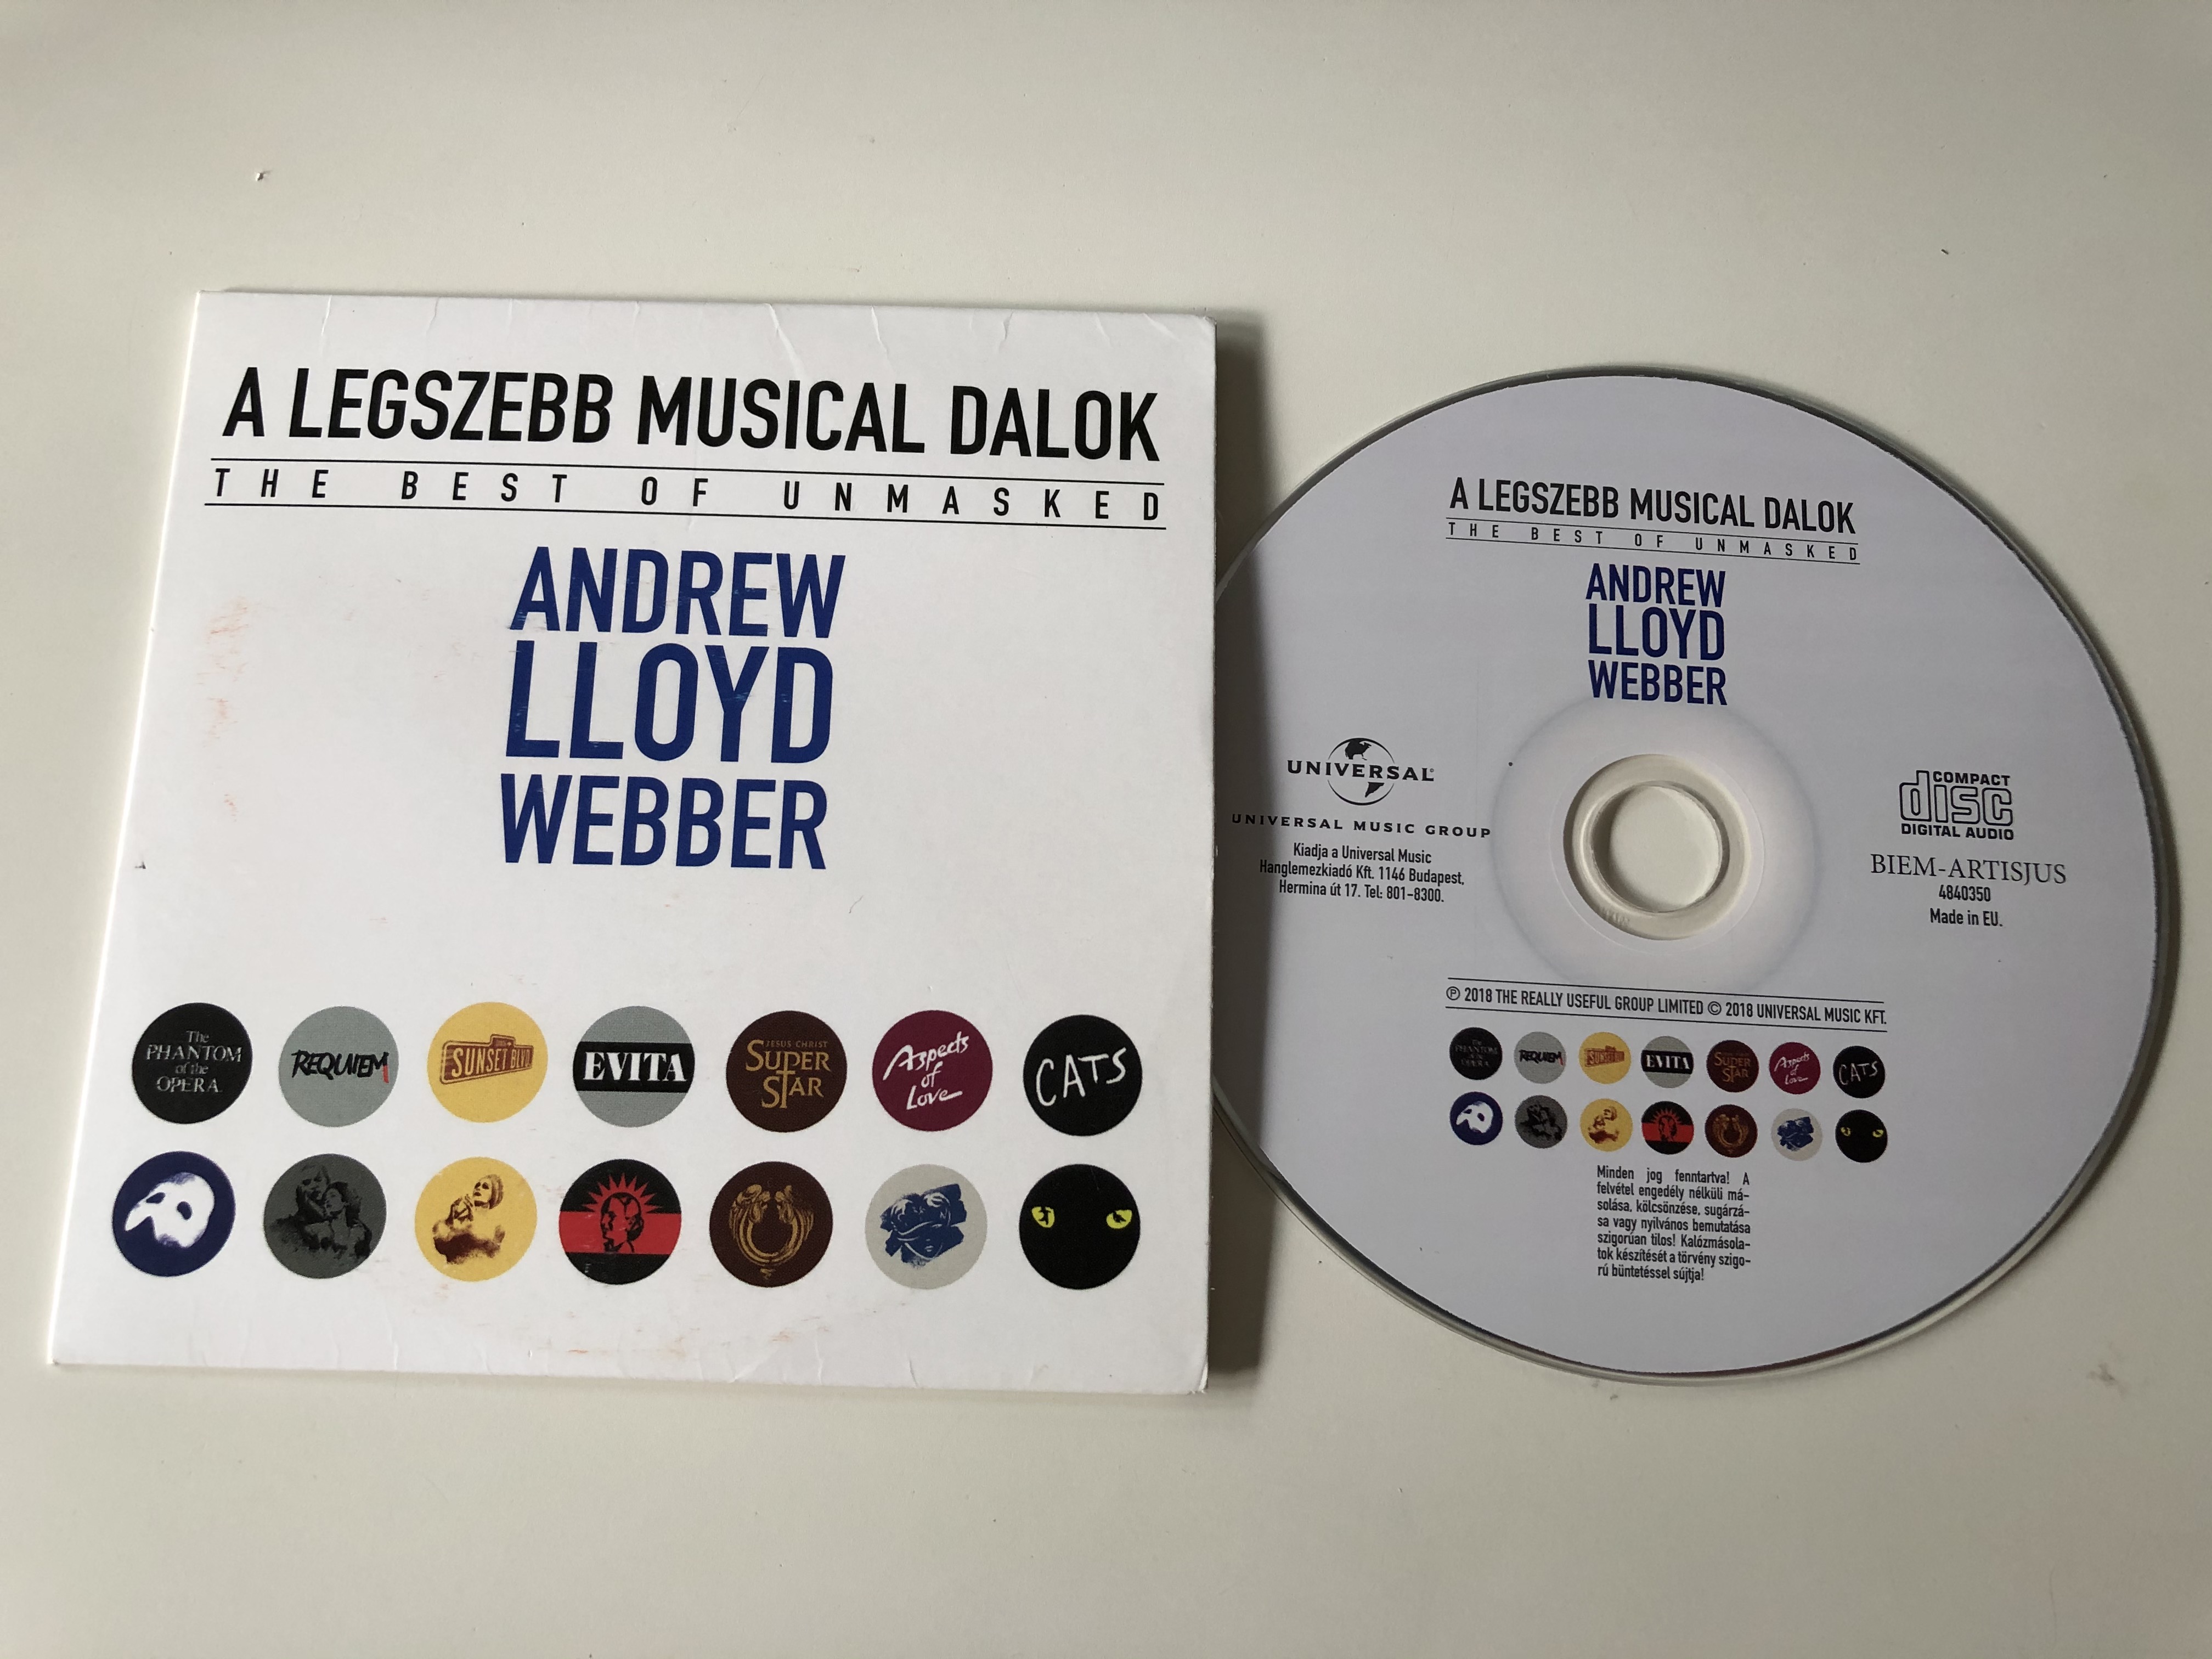 andrew-lloyd-webber-a-legszebb-musical-dalok-the-best-of-unmasked-universal-music-kft.-audio-cd-2018-4840350-1-.jpg